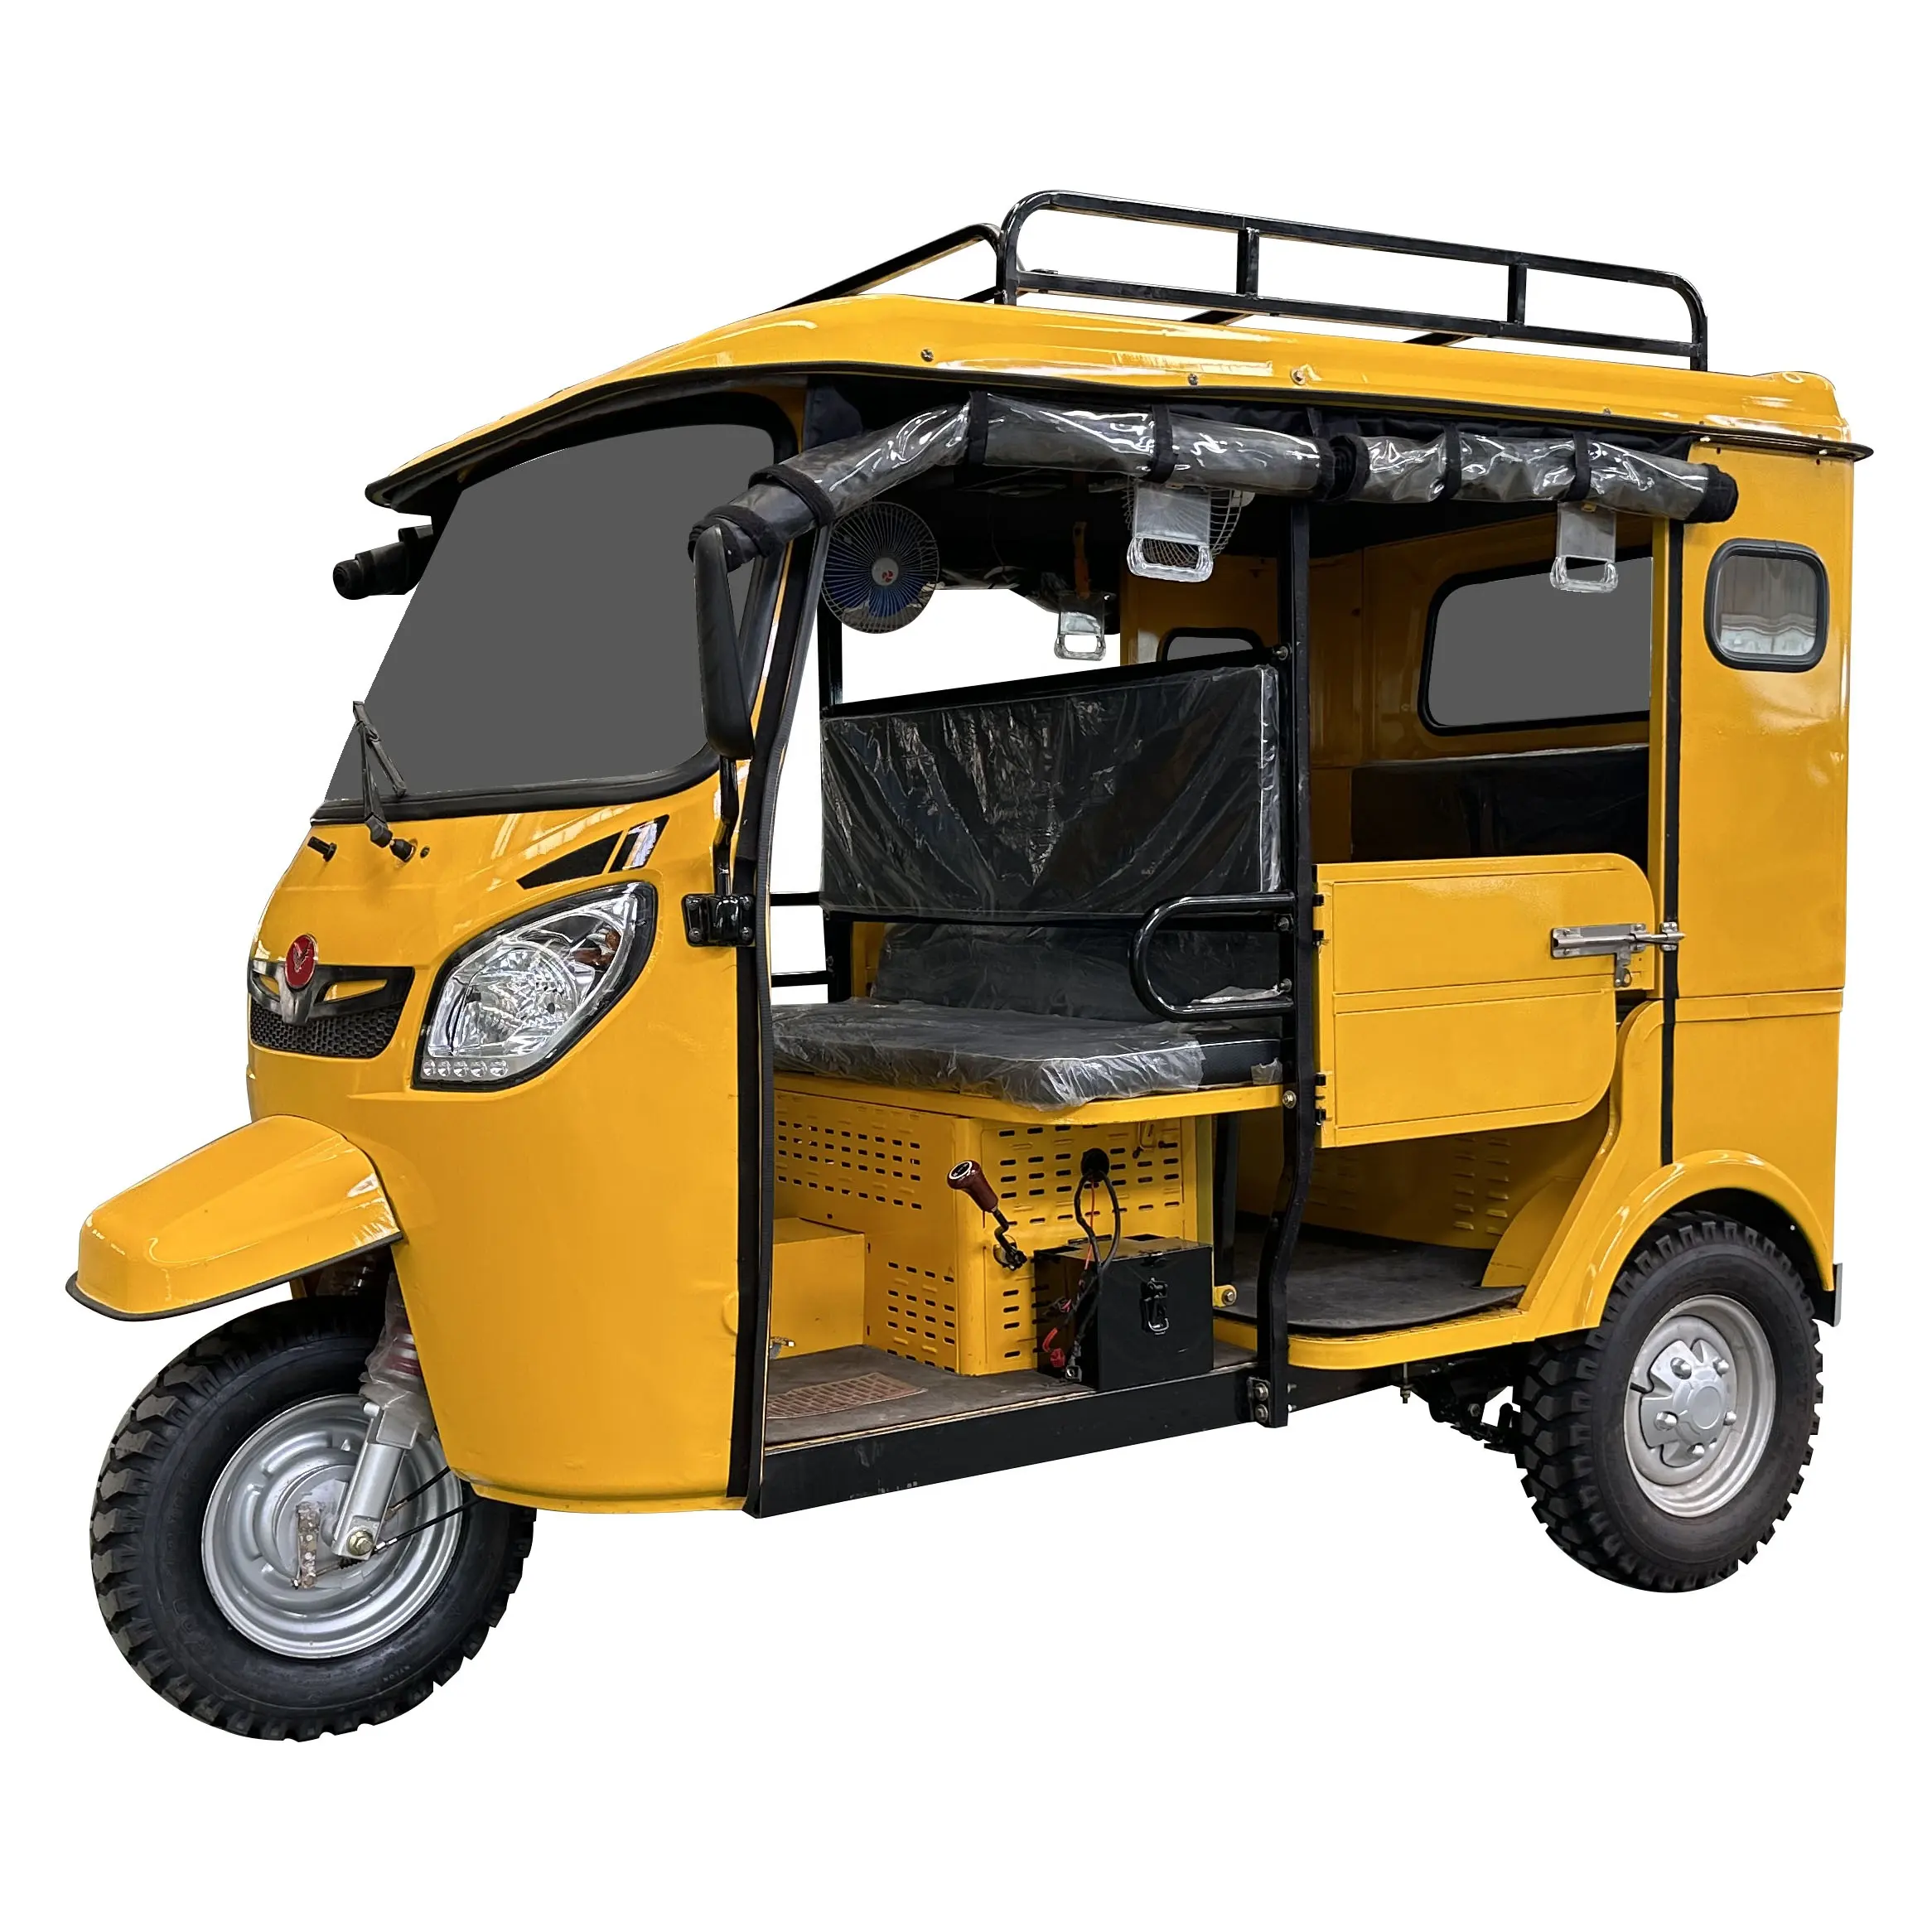 Motor Transport untuk penumpang sepeda roda tiga sepeda motor 200cc motocta taksi dengan 9 kursi